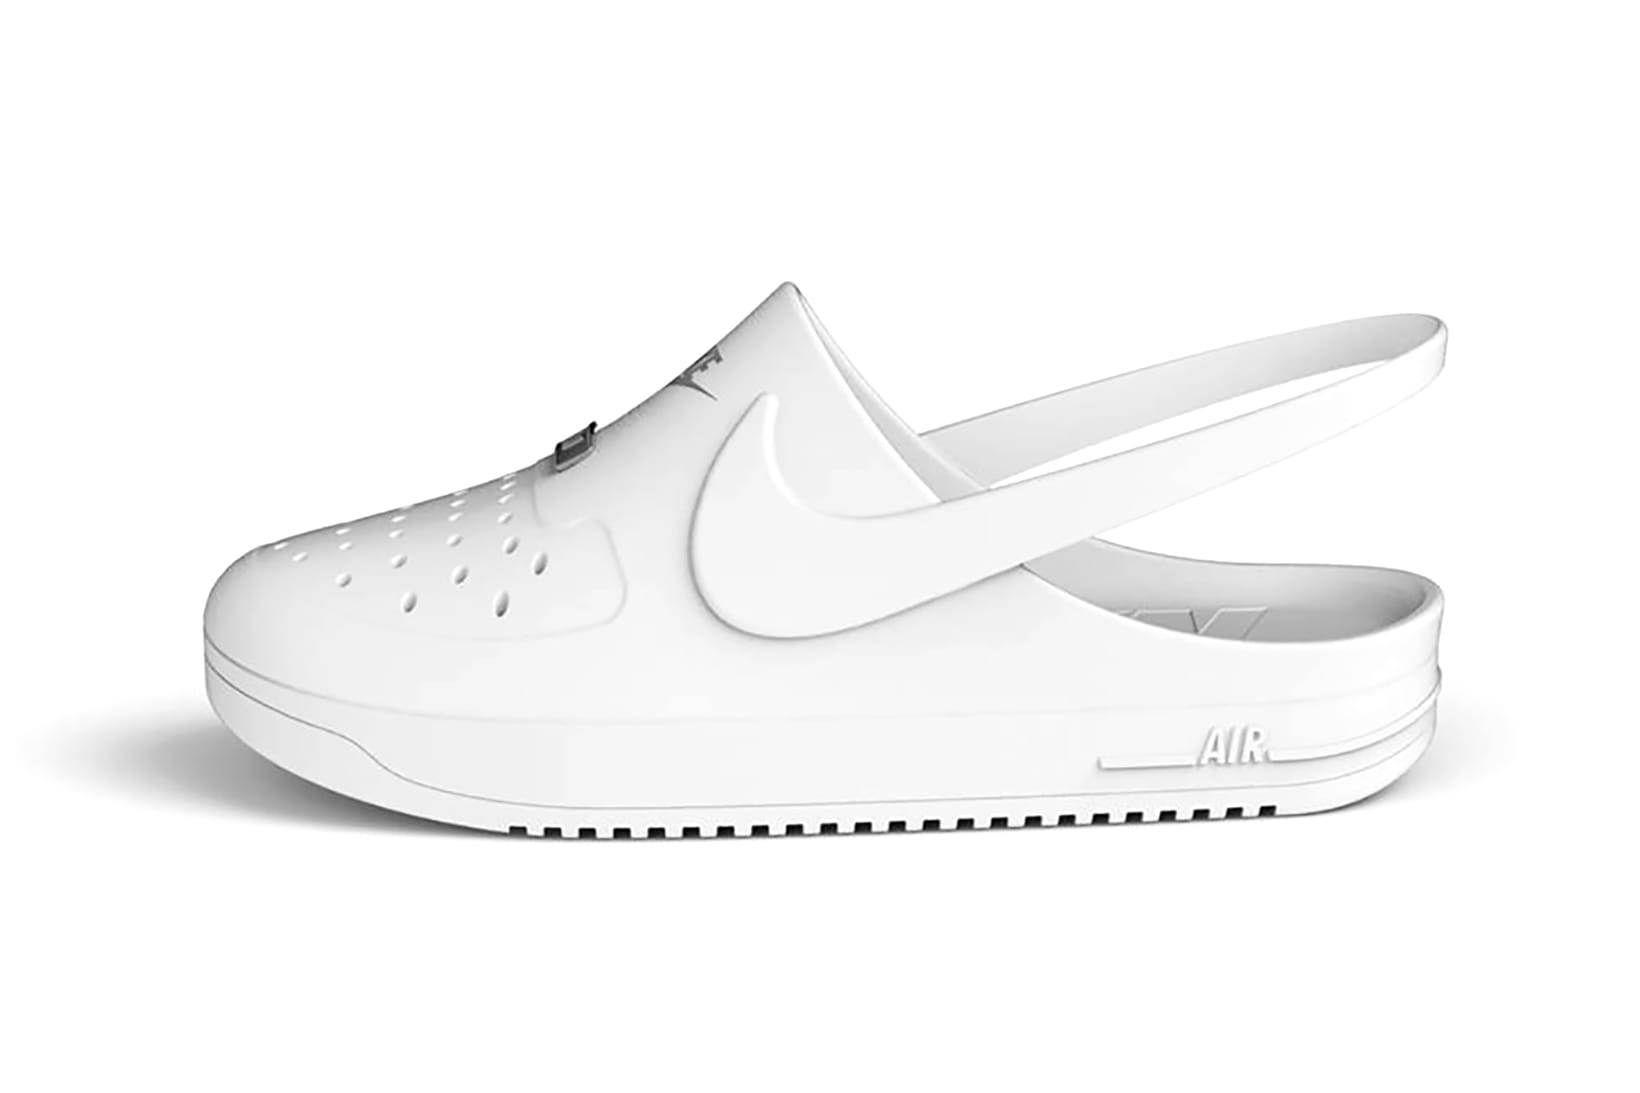 Crocs x Nike Air Force 1 Imagined as 